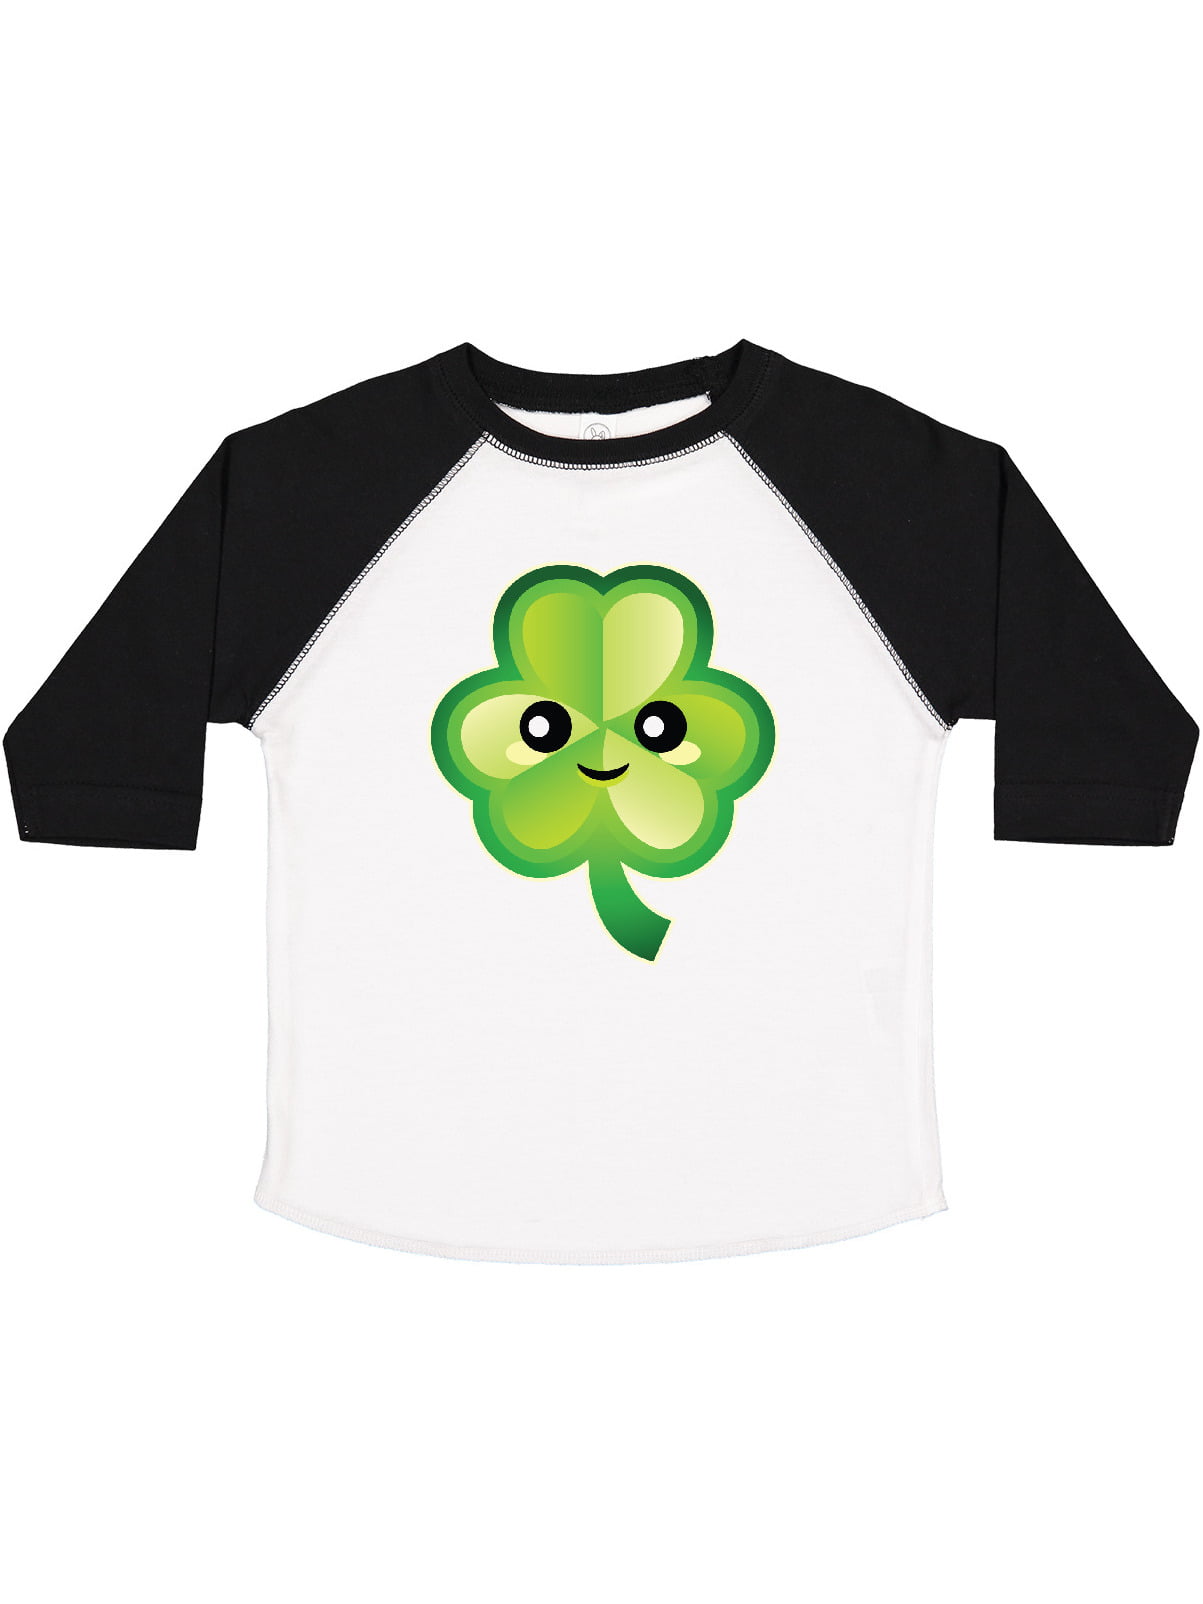 Cutest Clover in the Patch Kids Shirt St Patricks Day t shirt Cute Clover Irish Shirt Gifts for Kids Toddler Shirt Shamrock tshirt